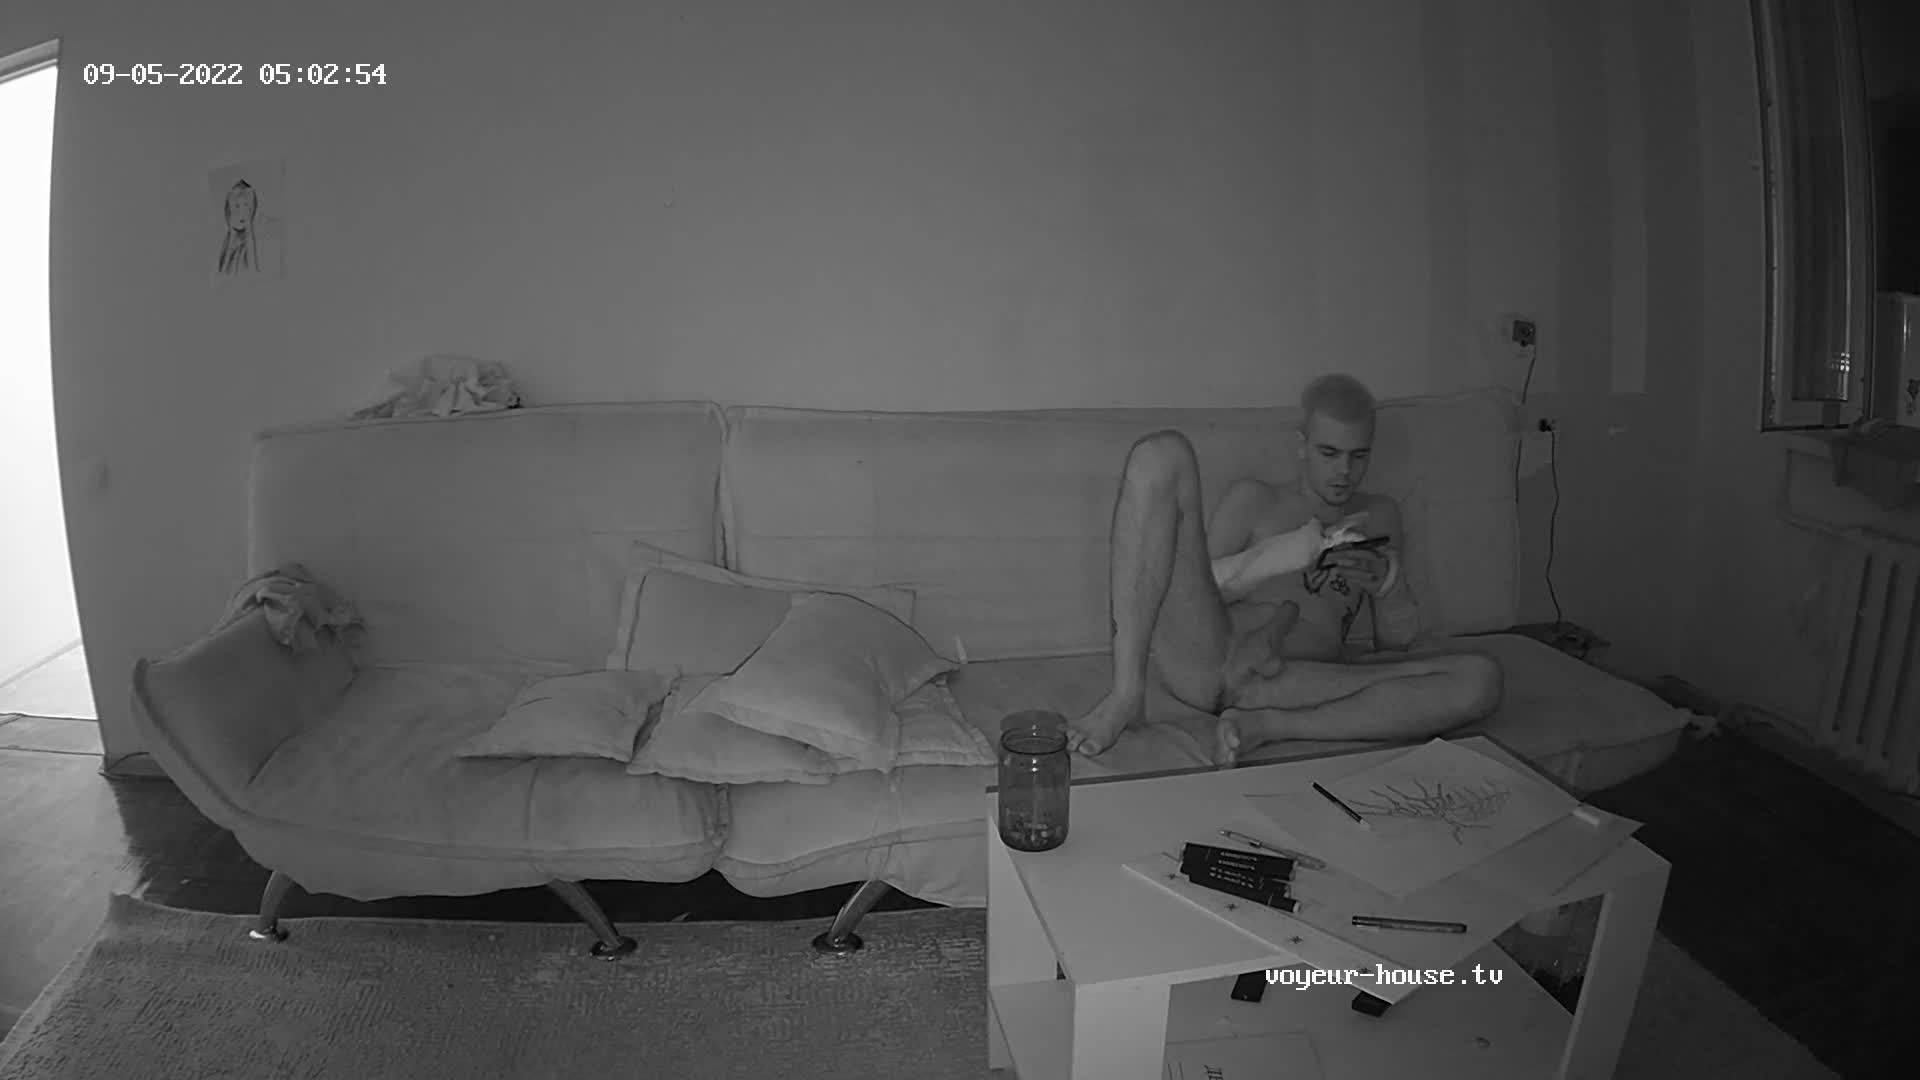 Artem jerking off in the living room 5 Sep 2022